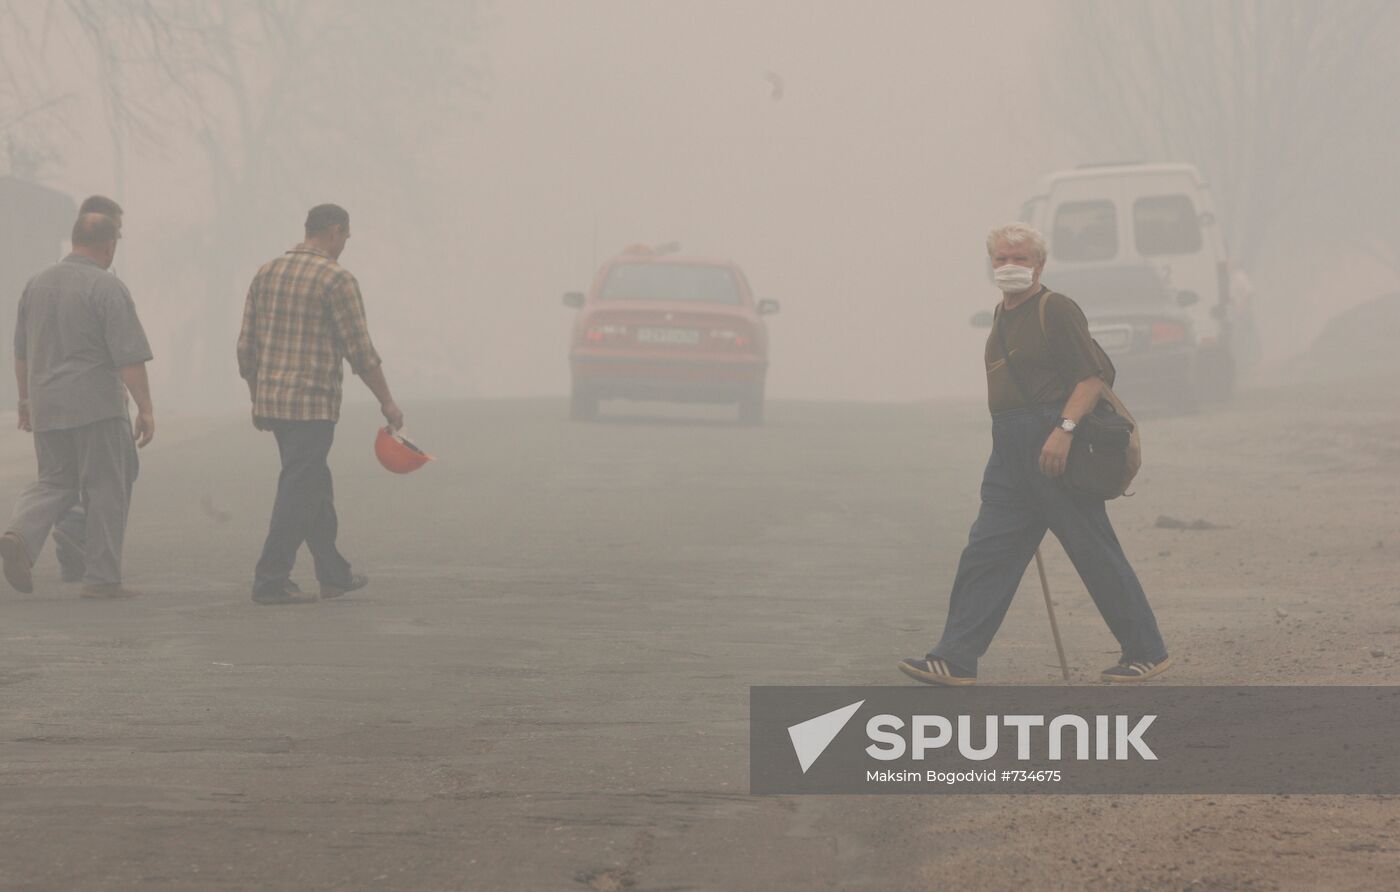 Village of Borkovka shrouded in smoke